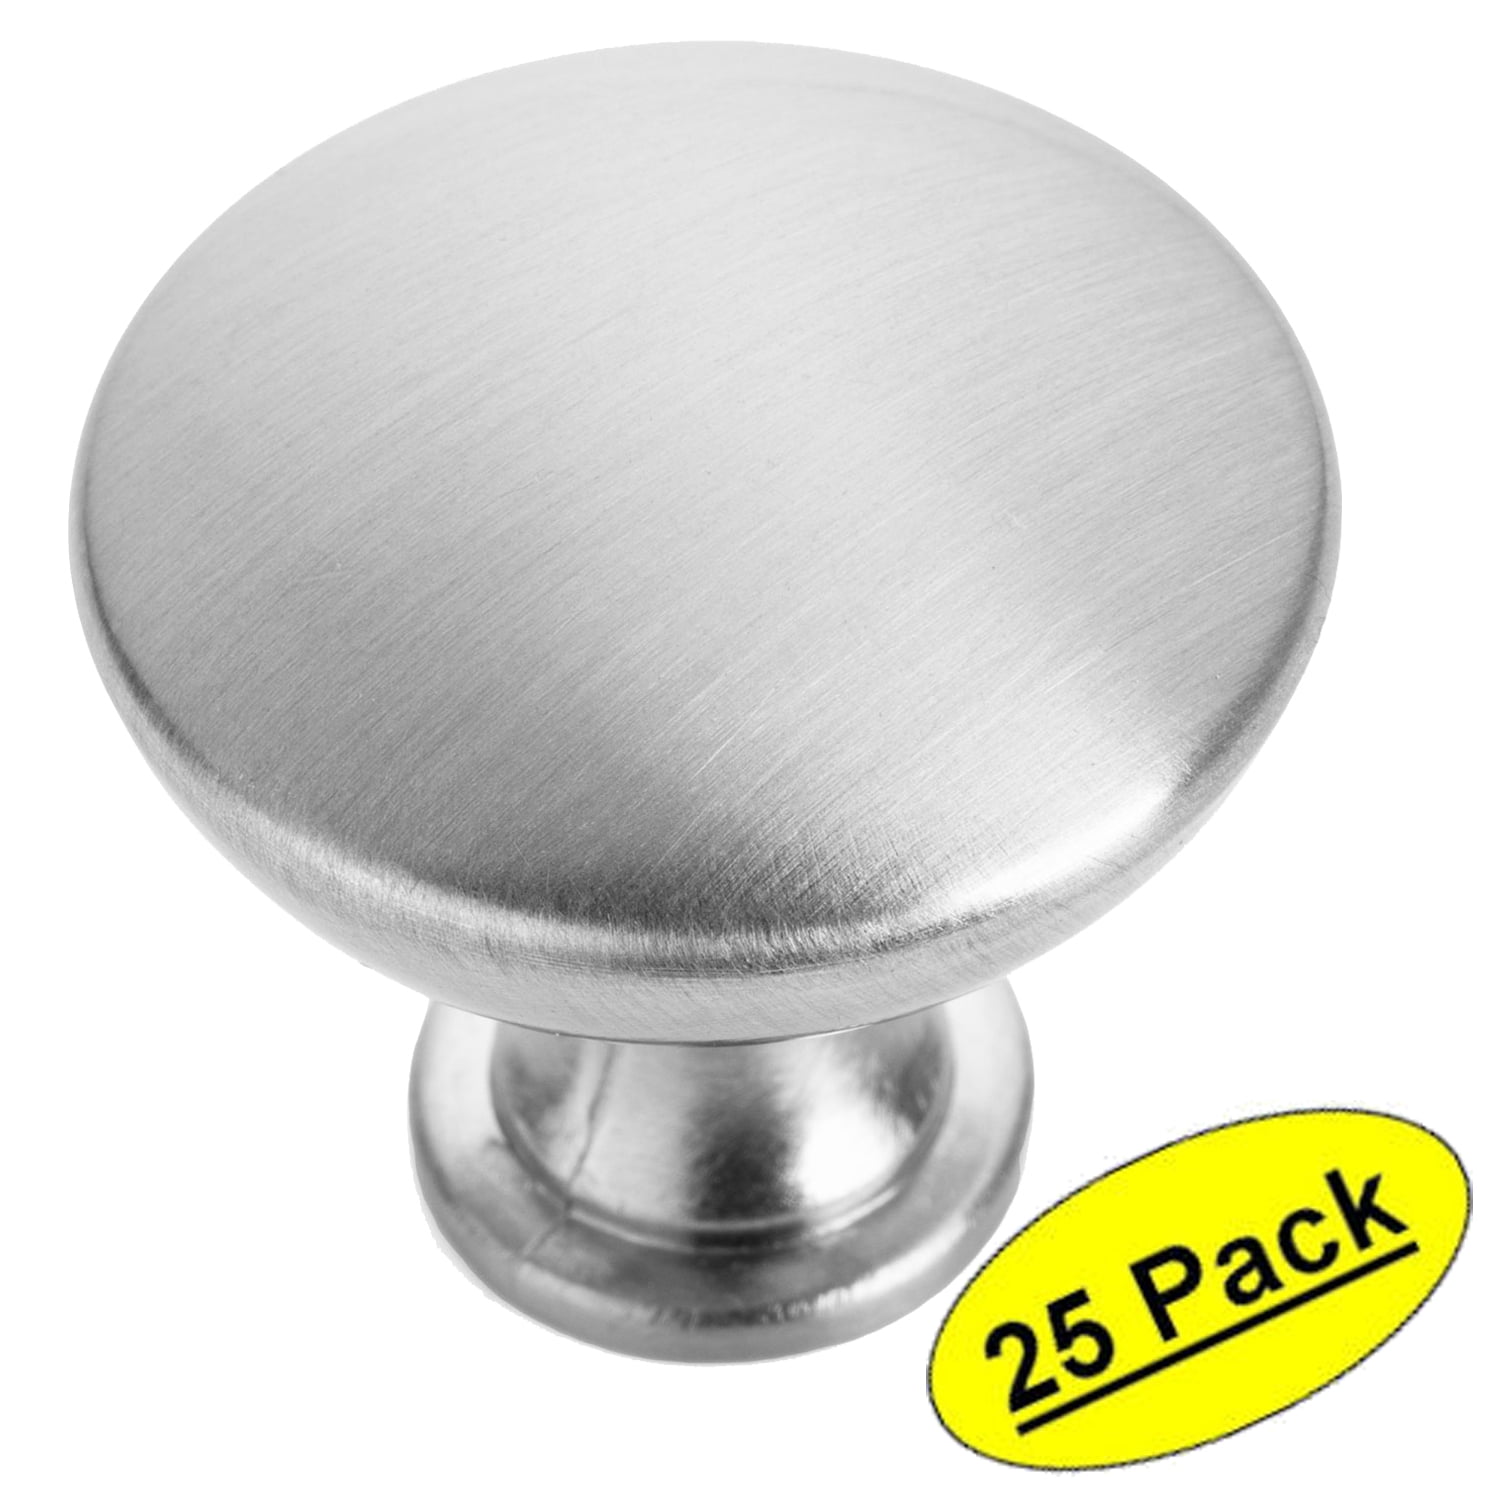 30 Satin Nickel Oval Kitchen Cabinet Knobs knob egg football 31mm Brushed 